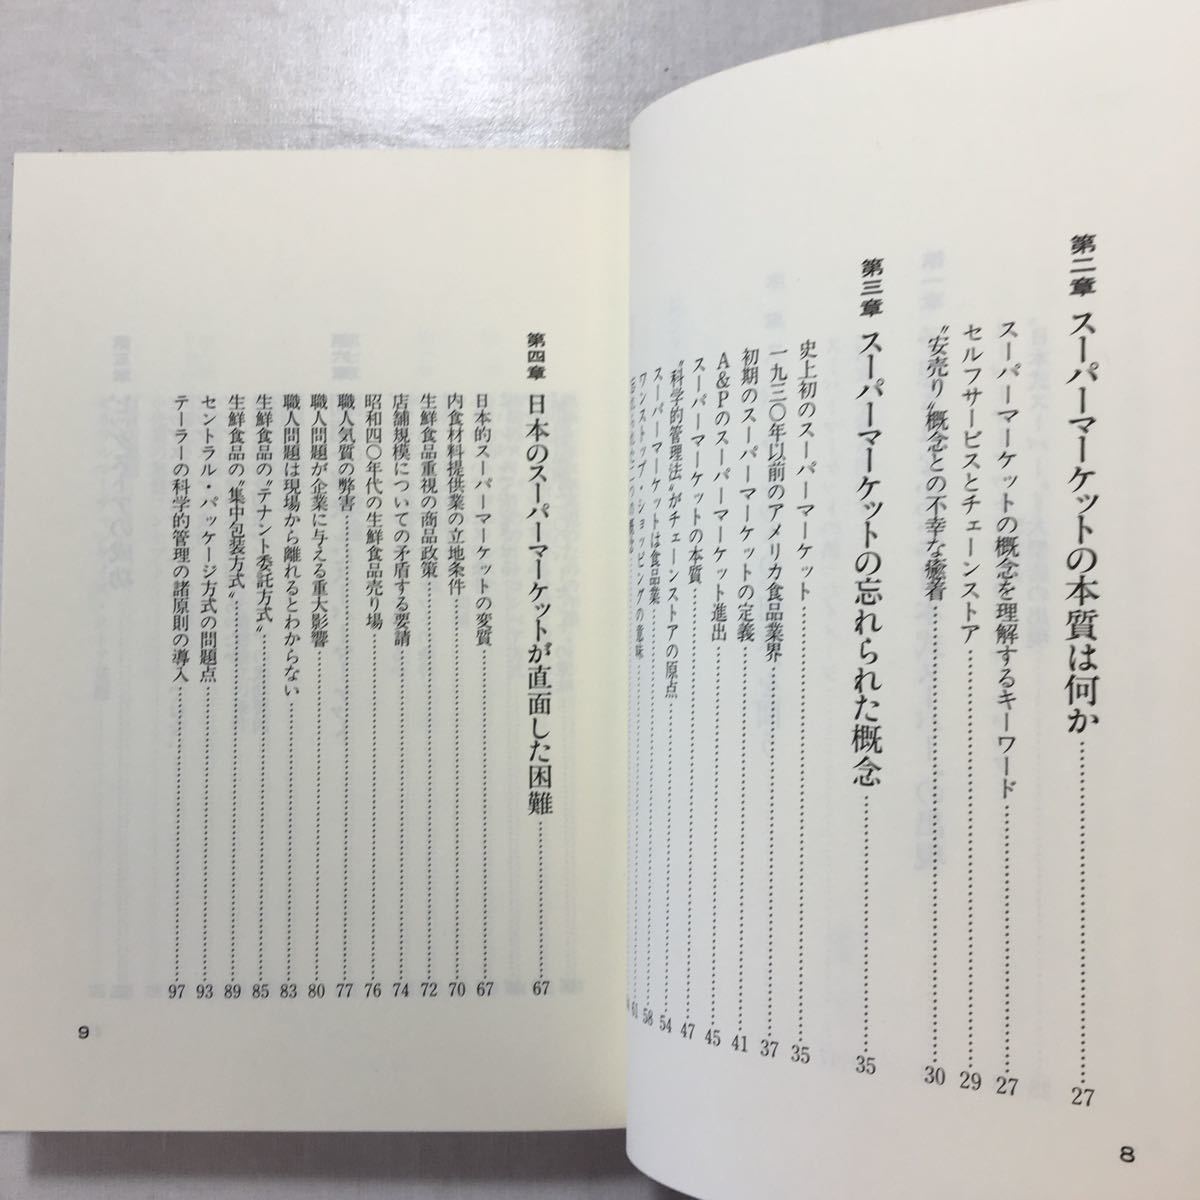 zaa-254♪日本スーパーマーケット原論 単行本 1993/12/3 　安土　敏 (その他) ぱるす出版